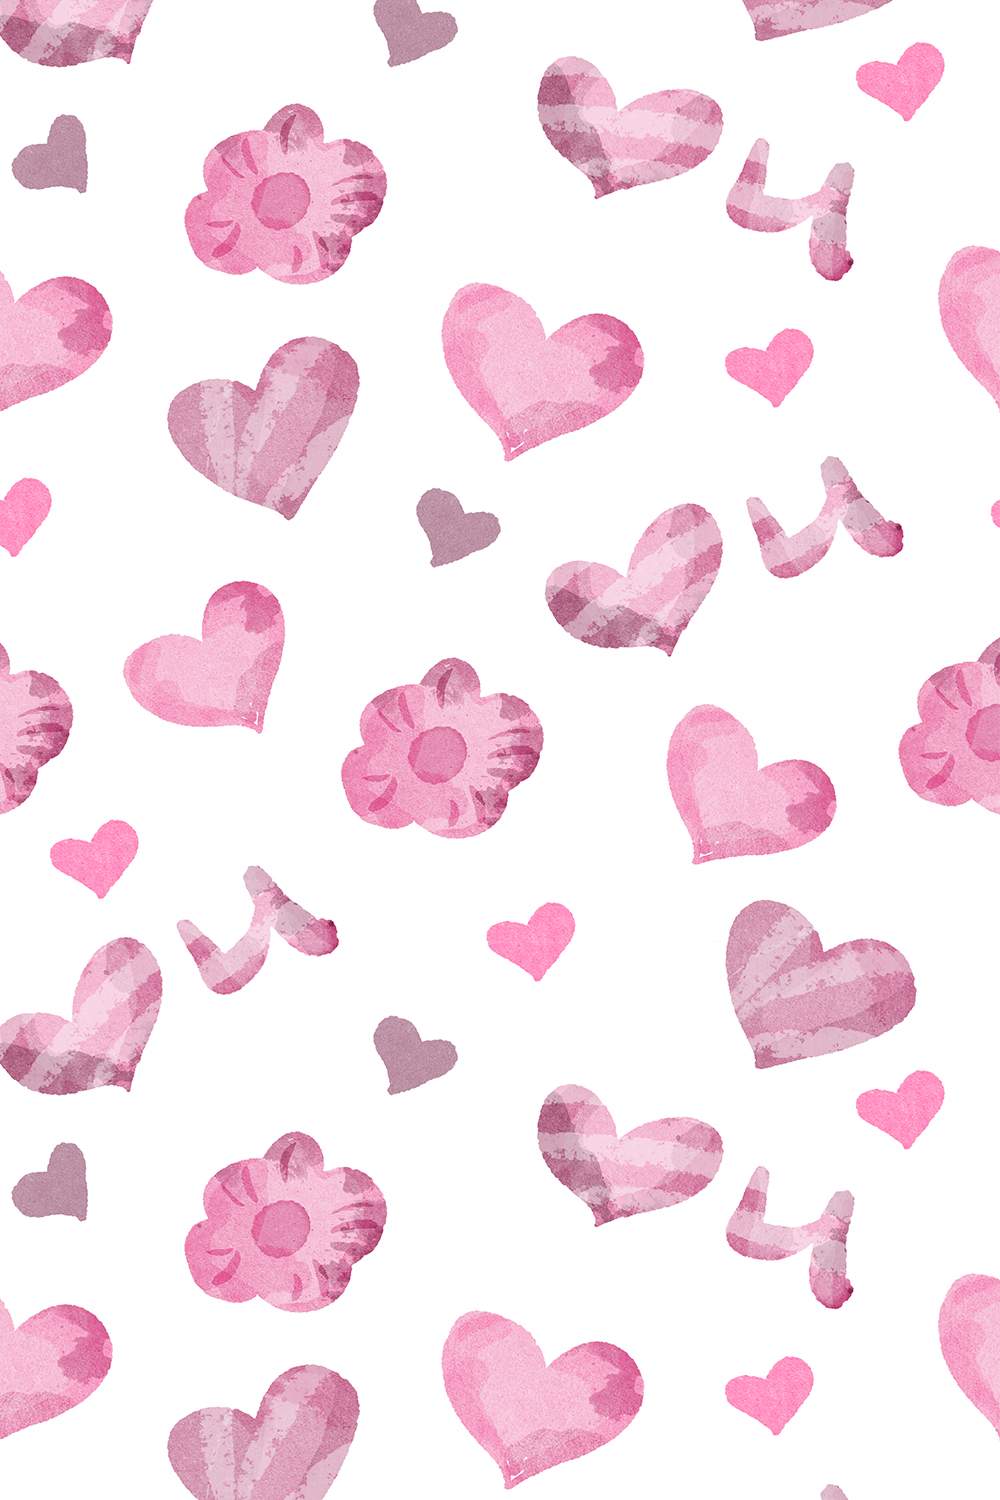 LOVE U valentine hearts seamless pattern pinterest preview image.